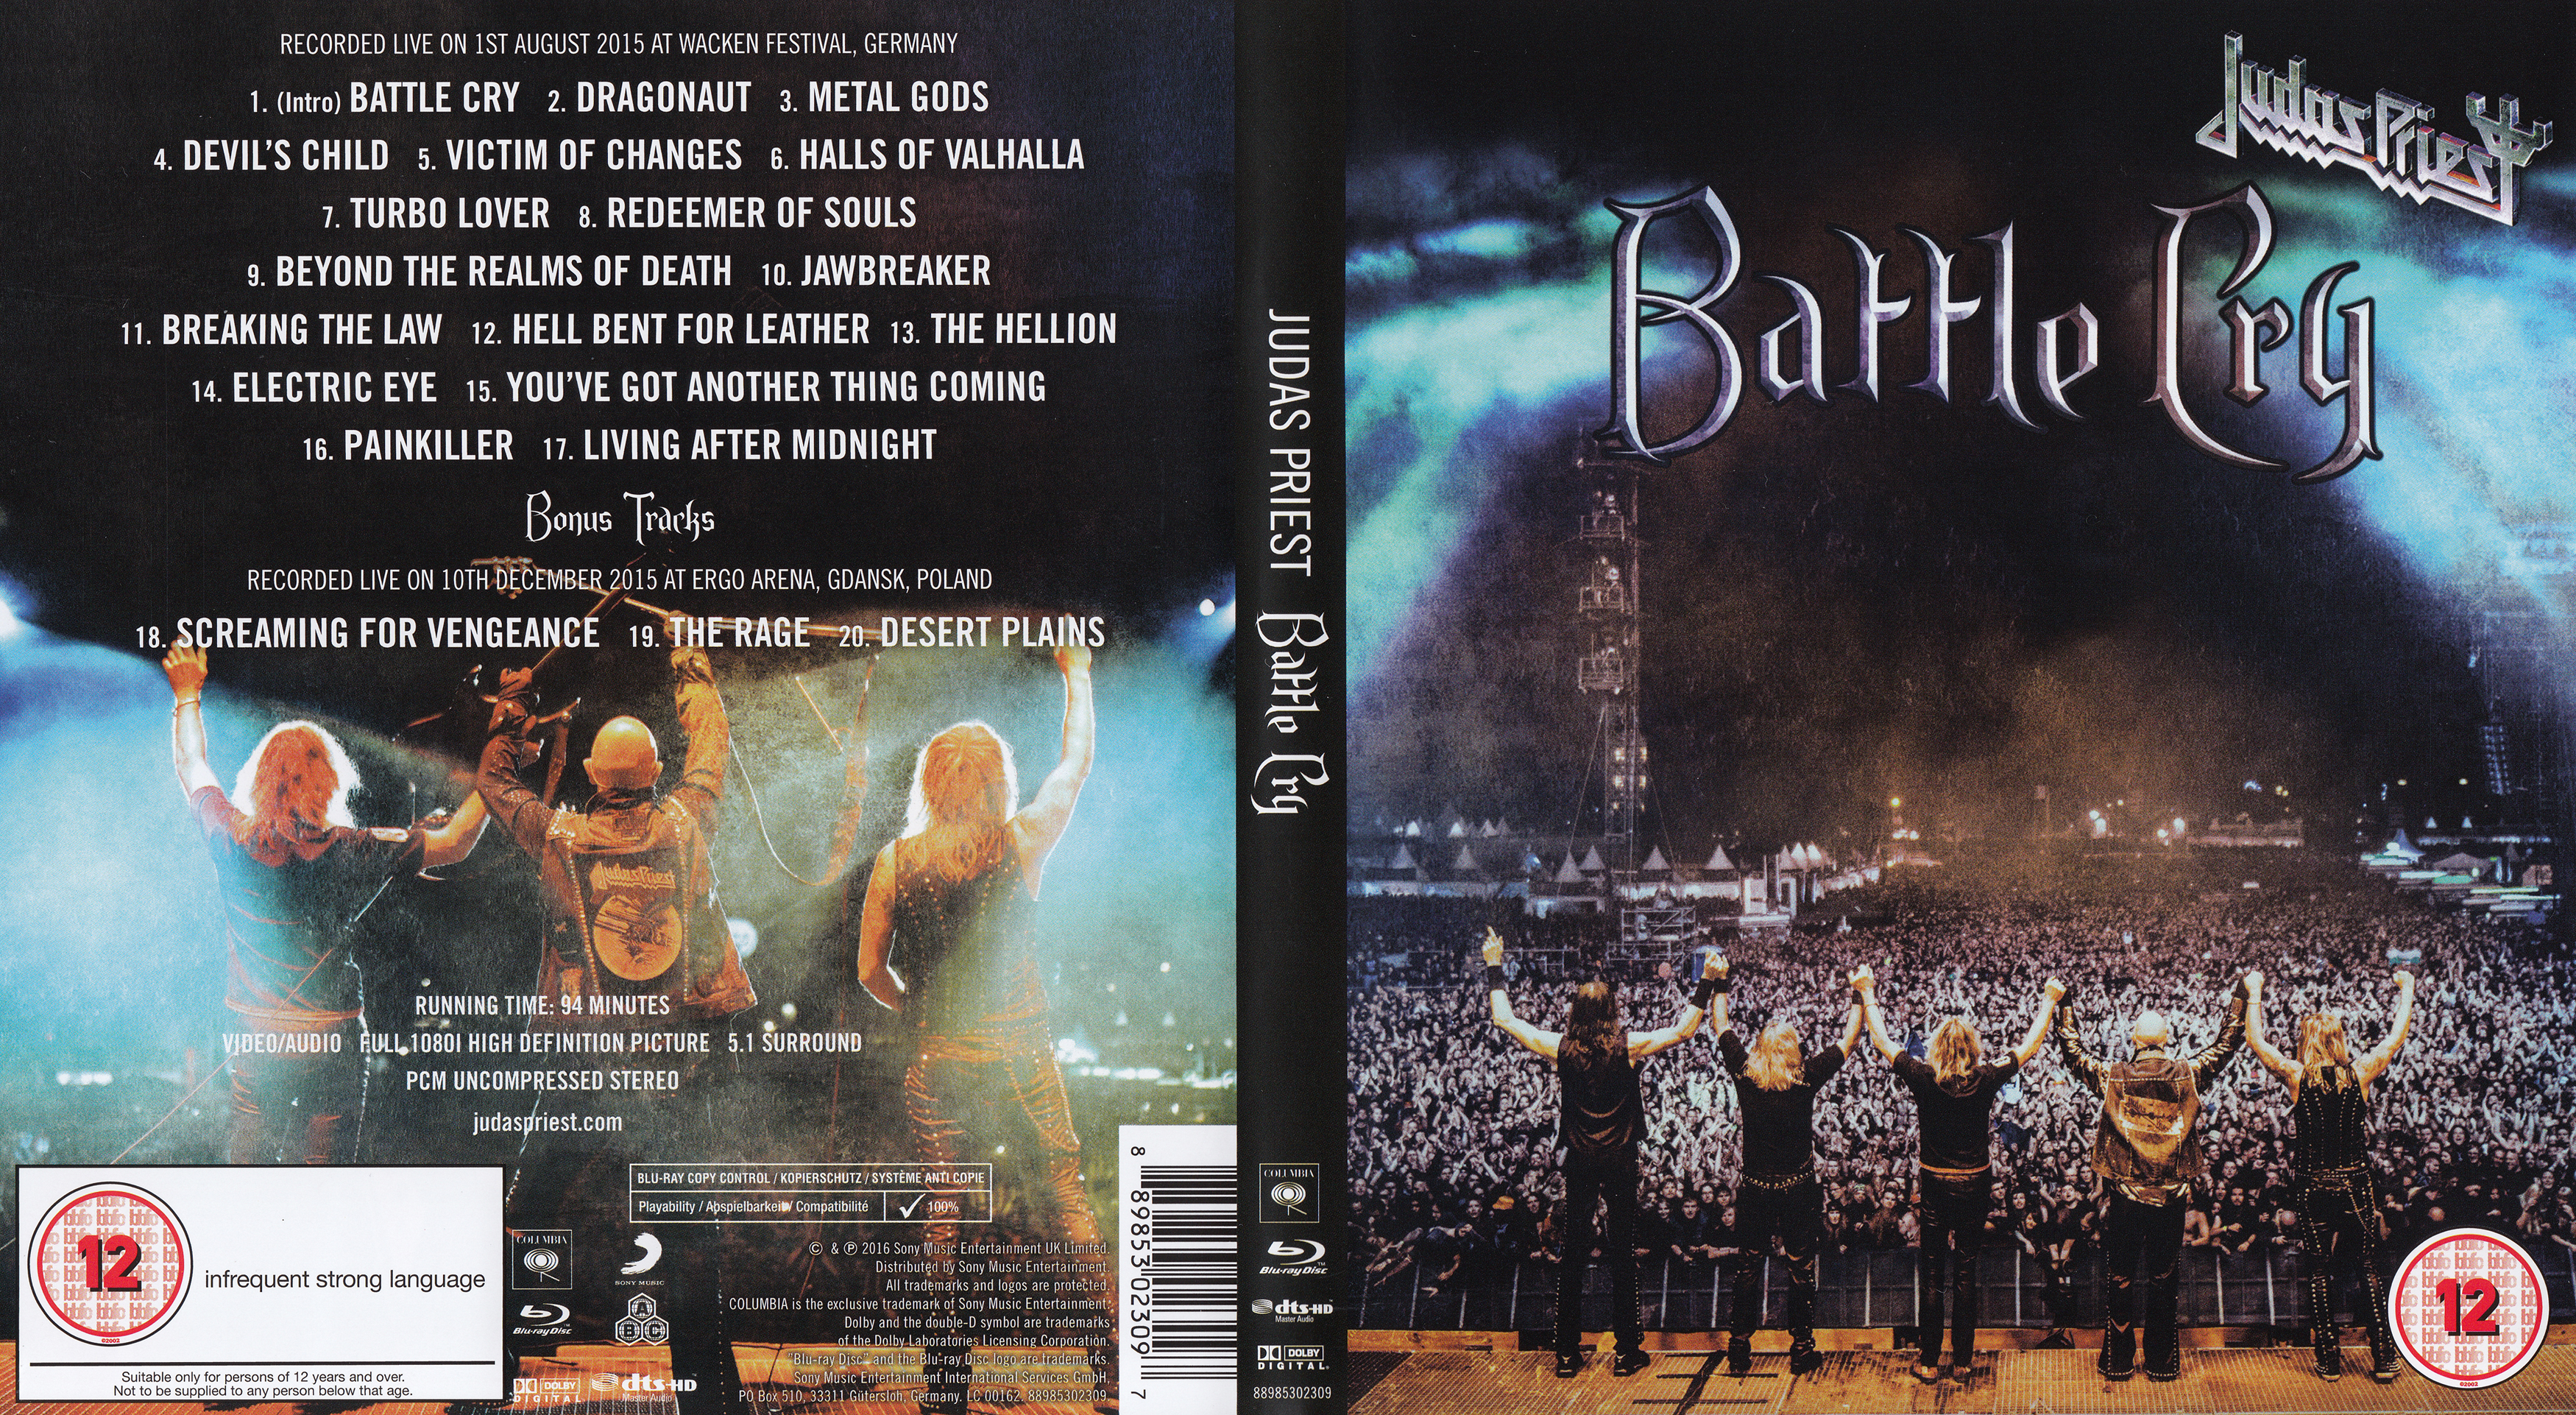 Judas Priest - Battle Cry Blu ray 30 gb exclusivo 